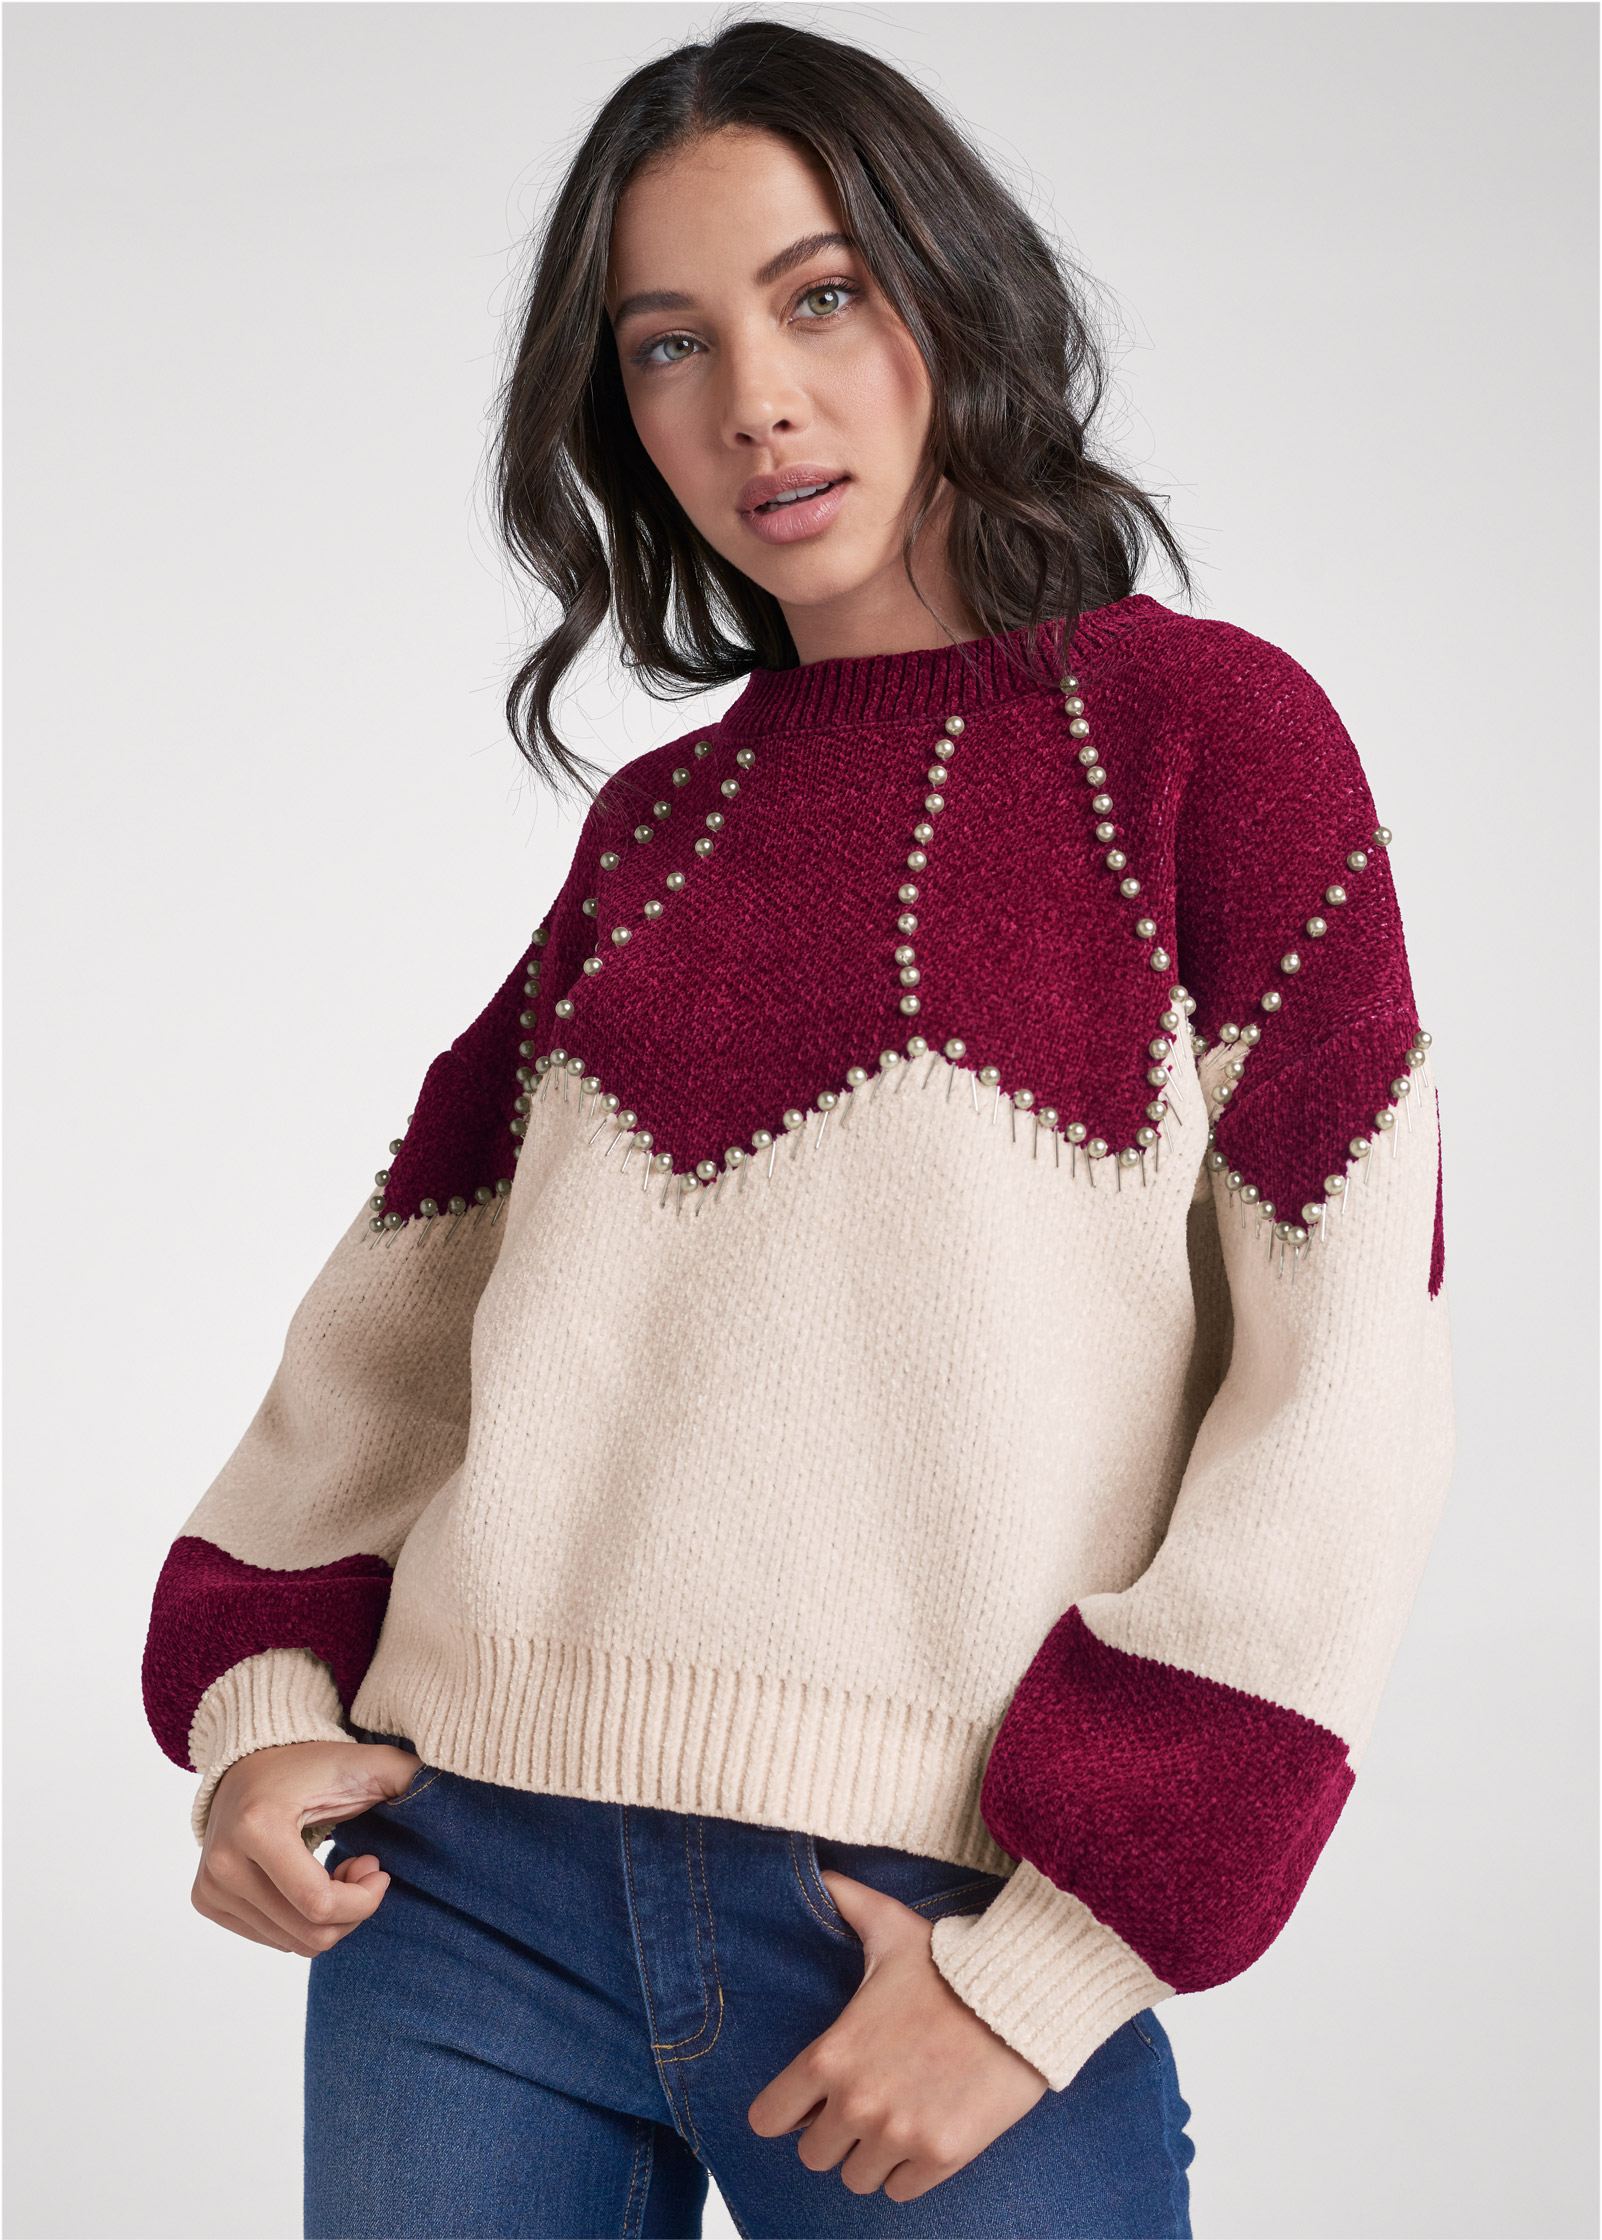 Faux-pearl chenille sweater in Red & White | VENUS